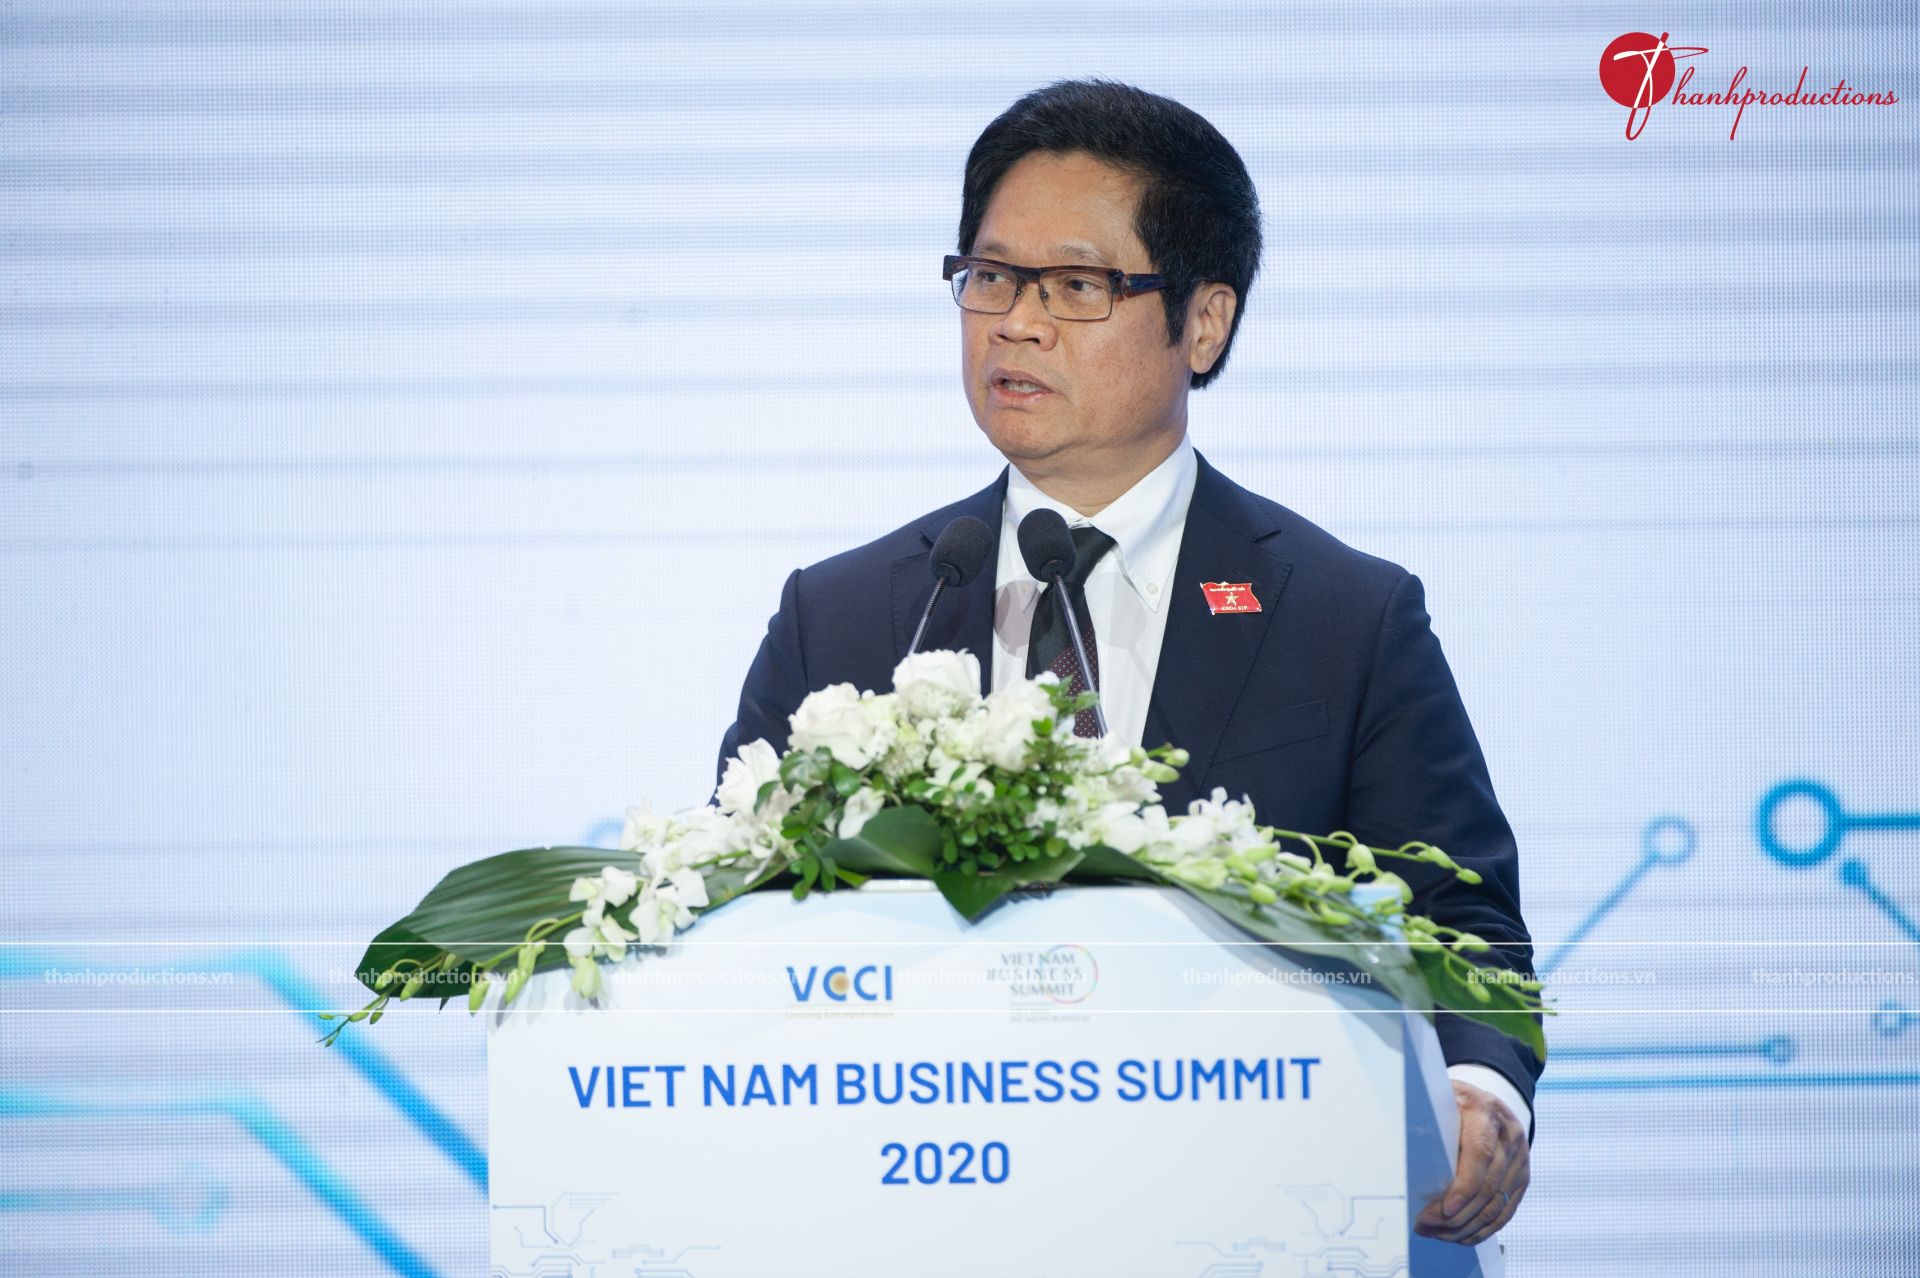 VIETNAM BUSINESS SUMMIT 2020